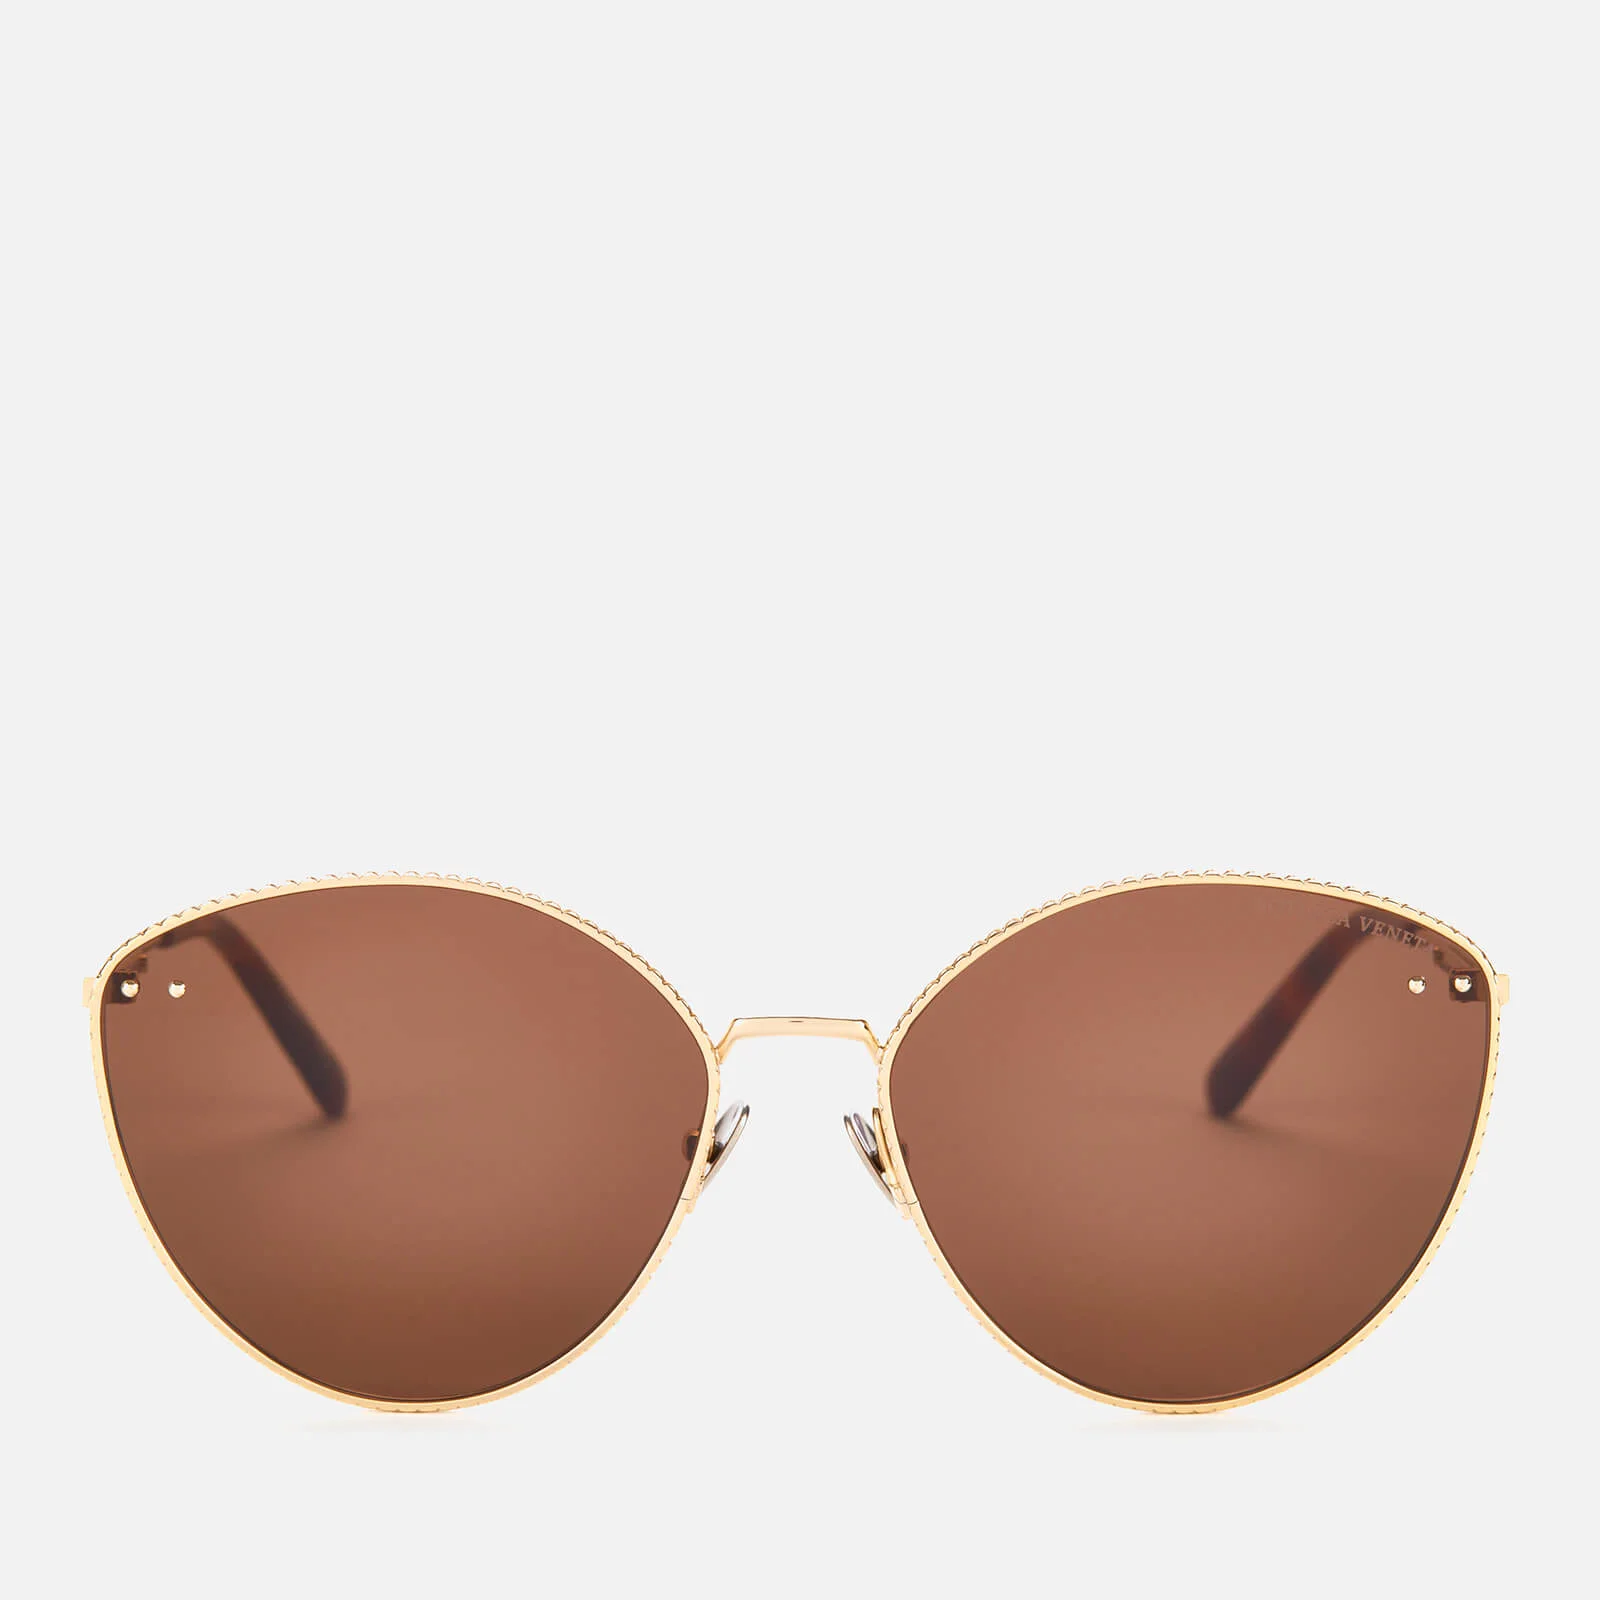 Bottega Veneta Women's Cat Eye Metal Frame Sunglasses - Gold/Brown Image 1